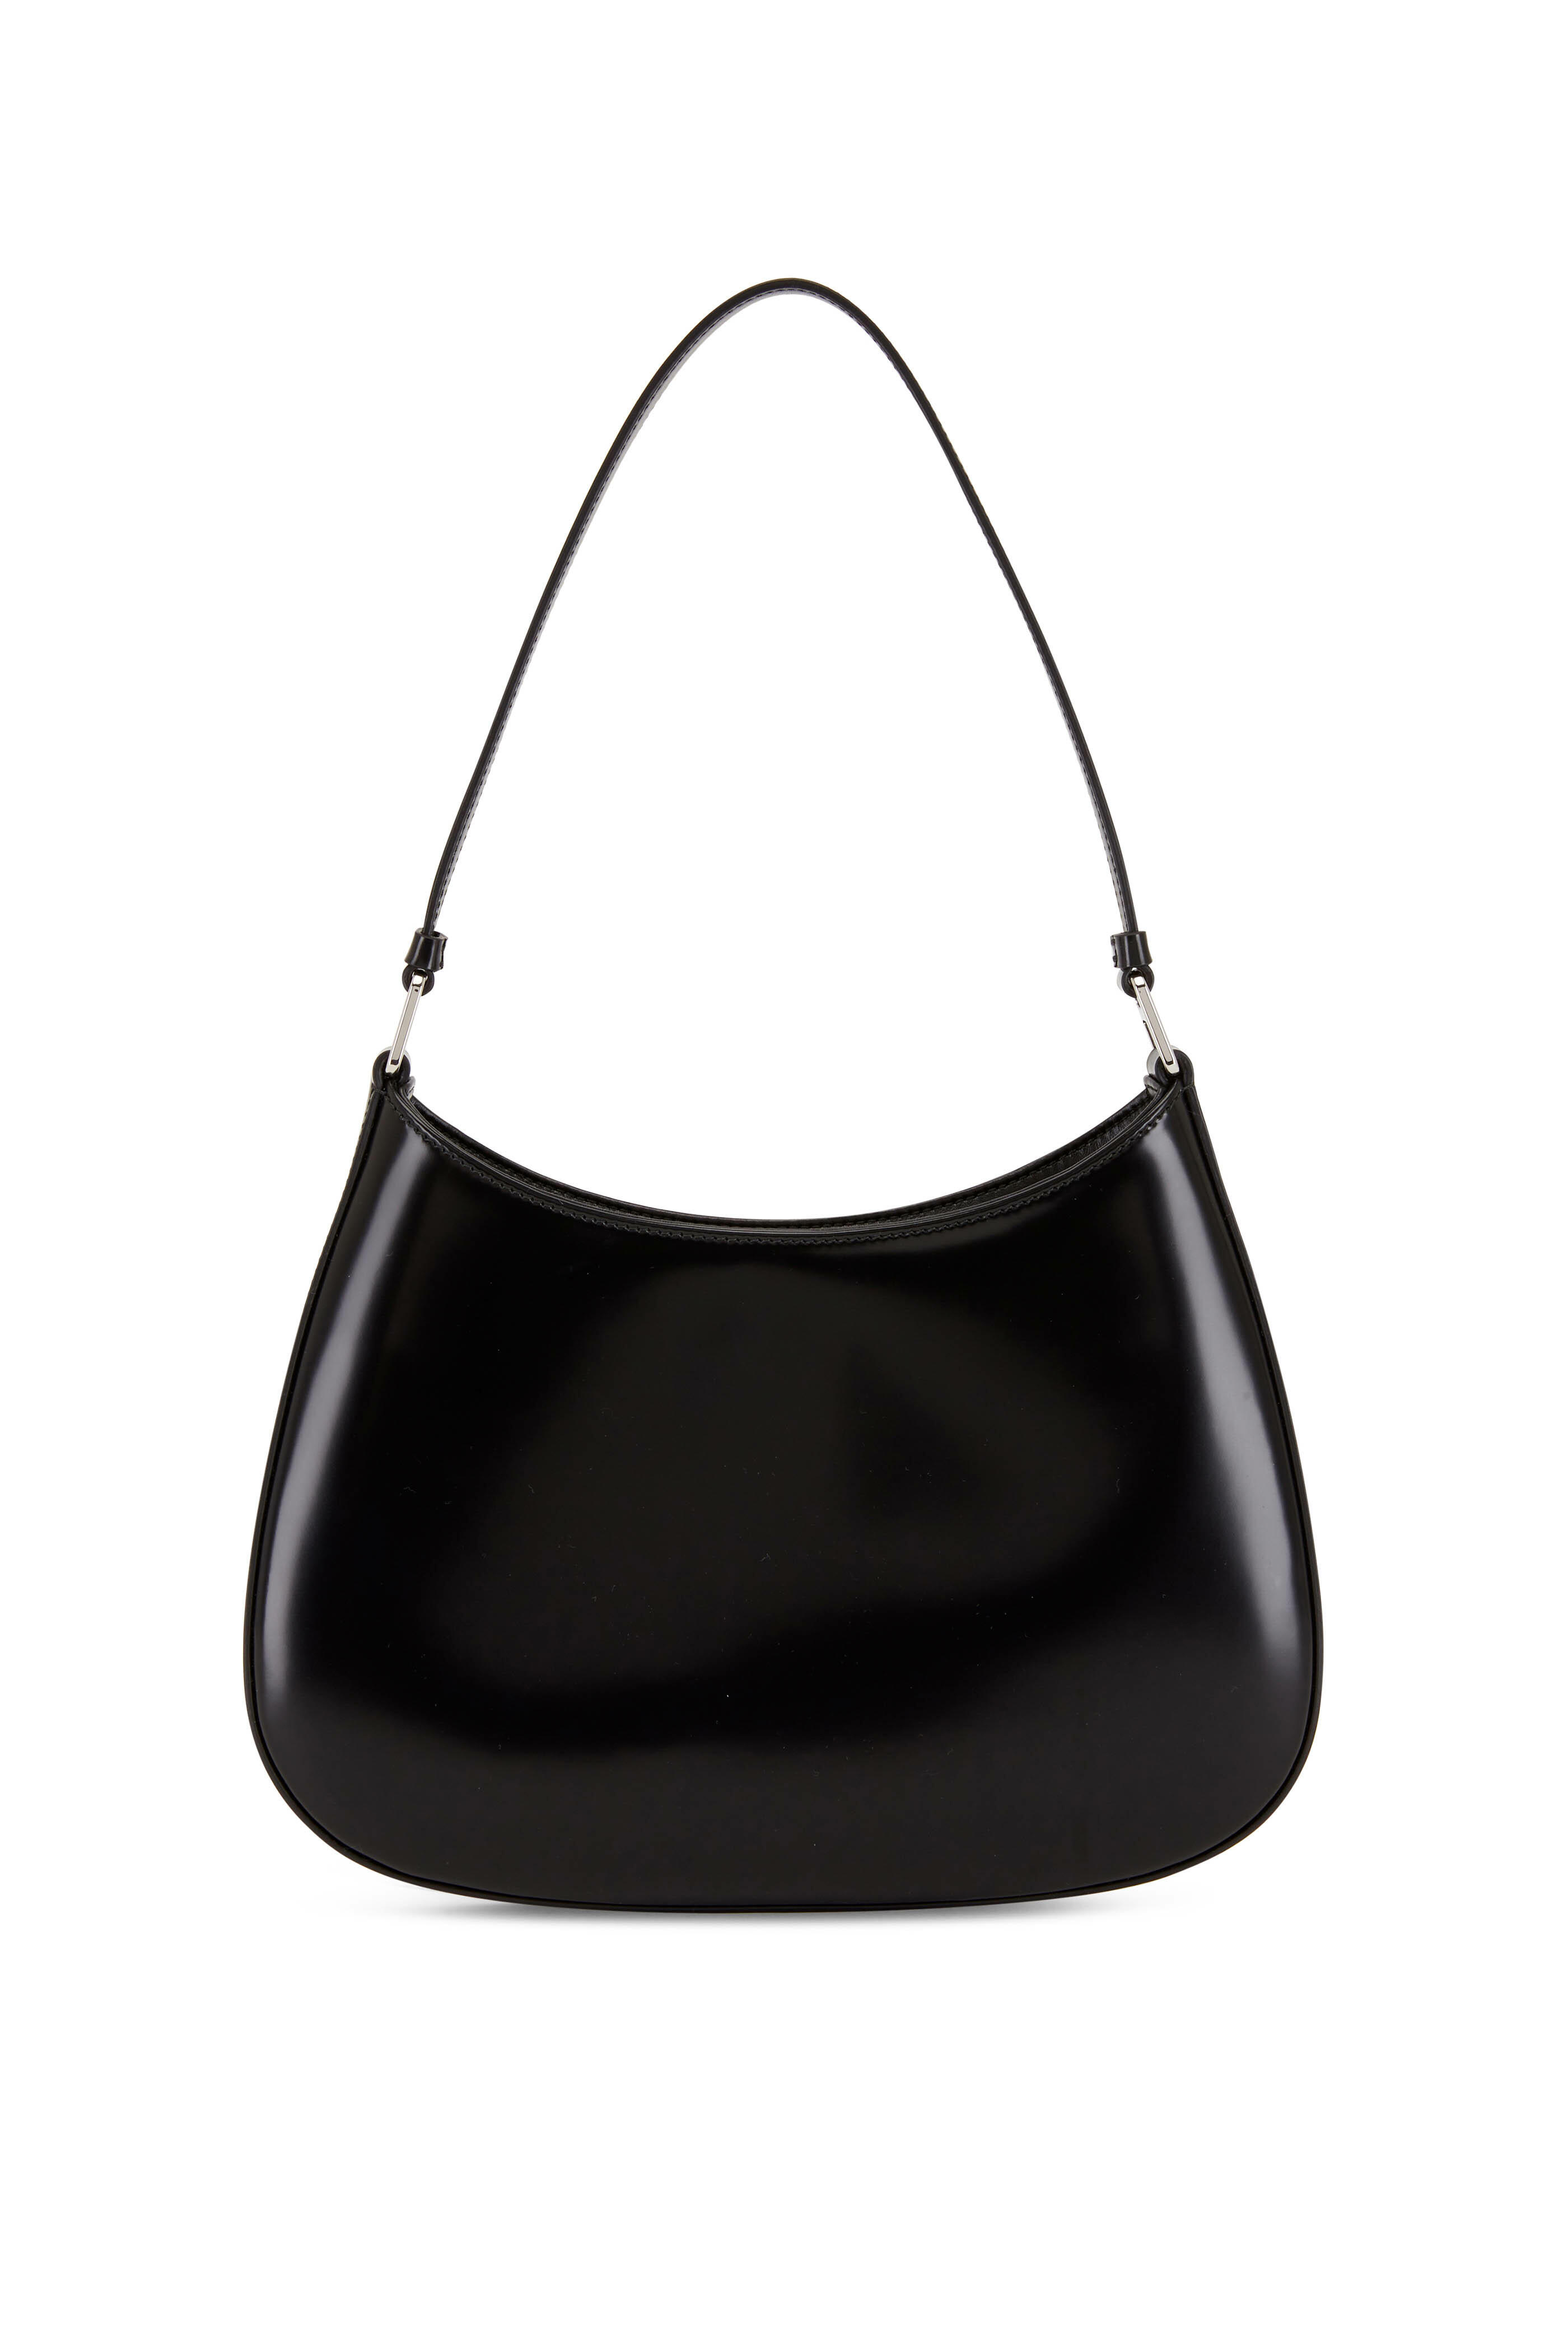 Prada - Cleo Black Spazalatto Leather Shoulder Bag